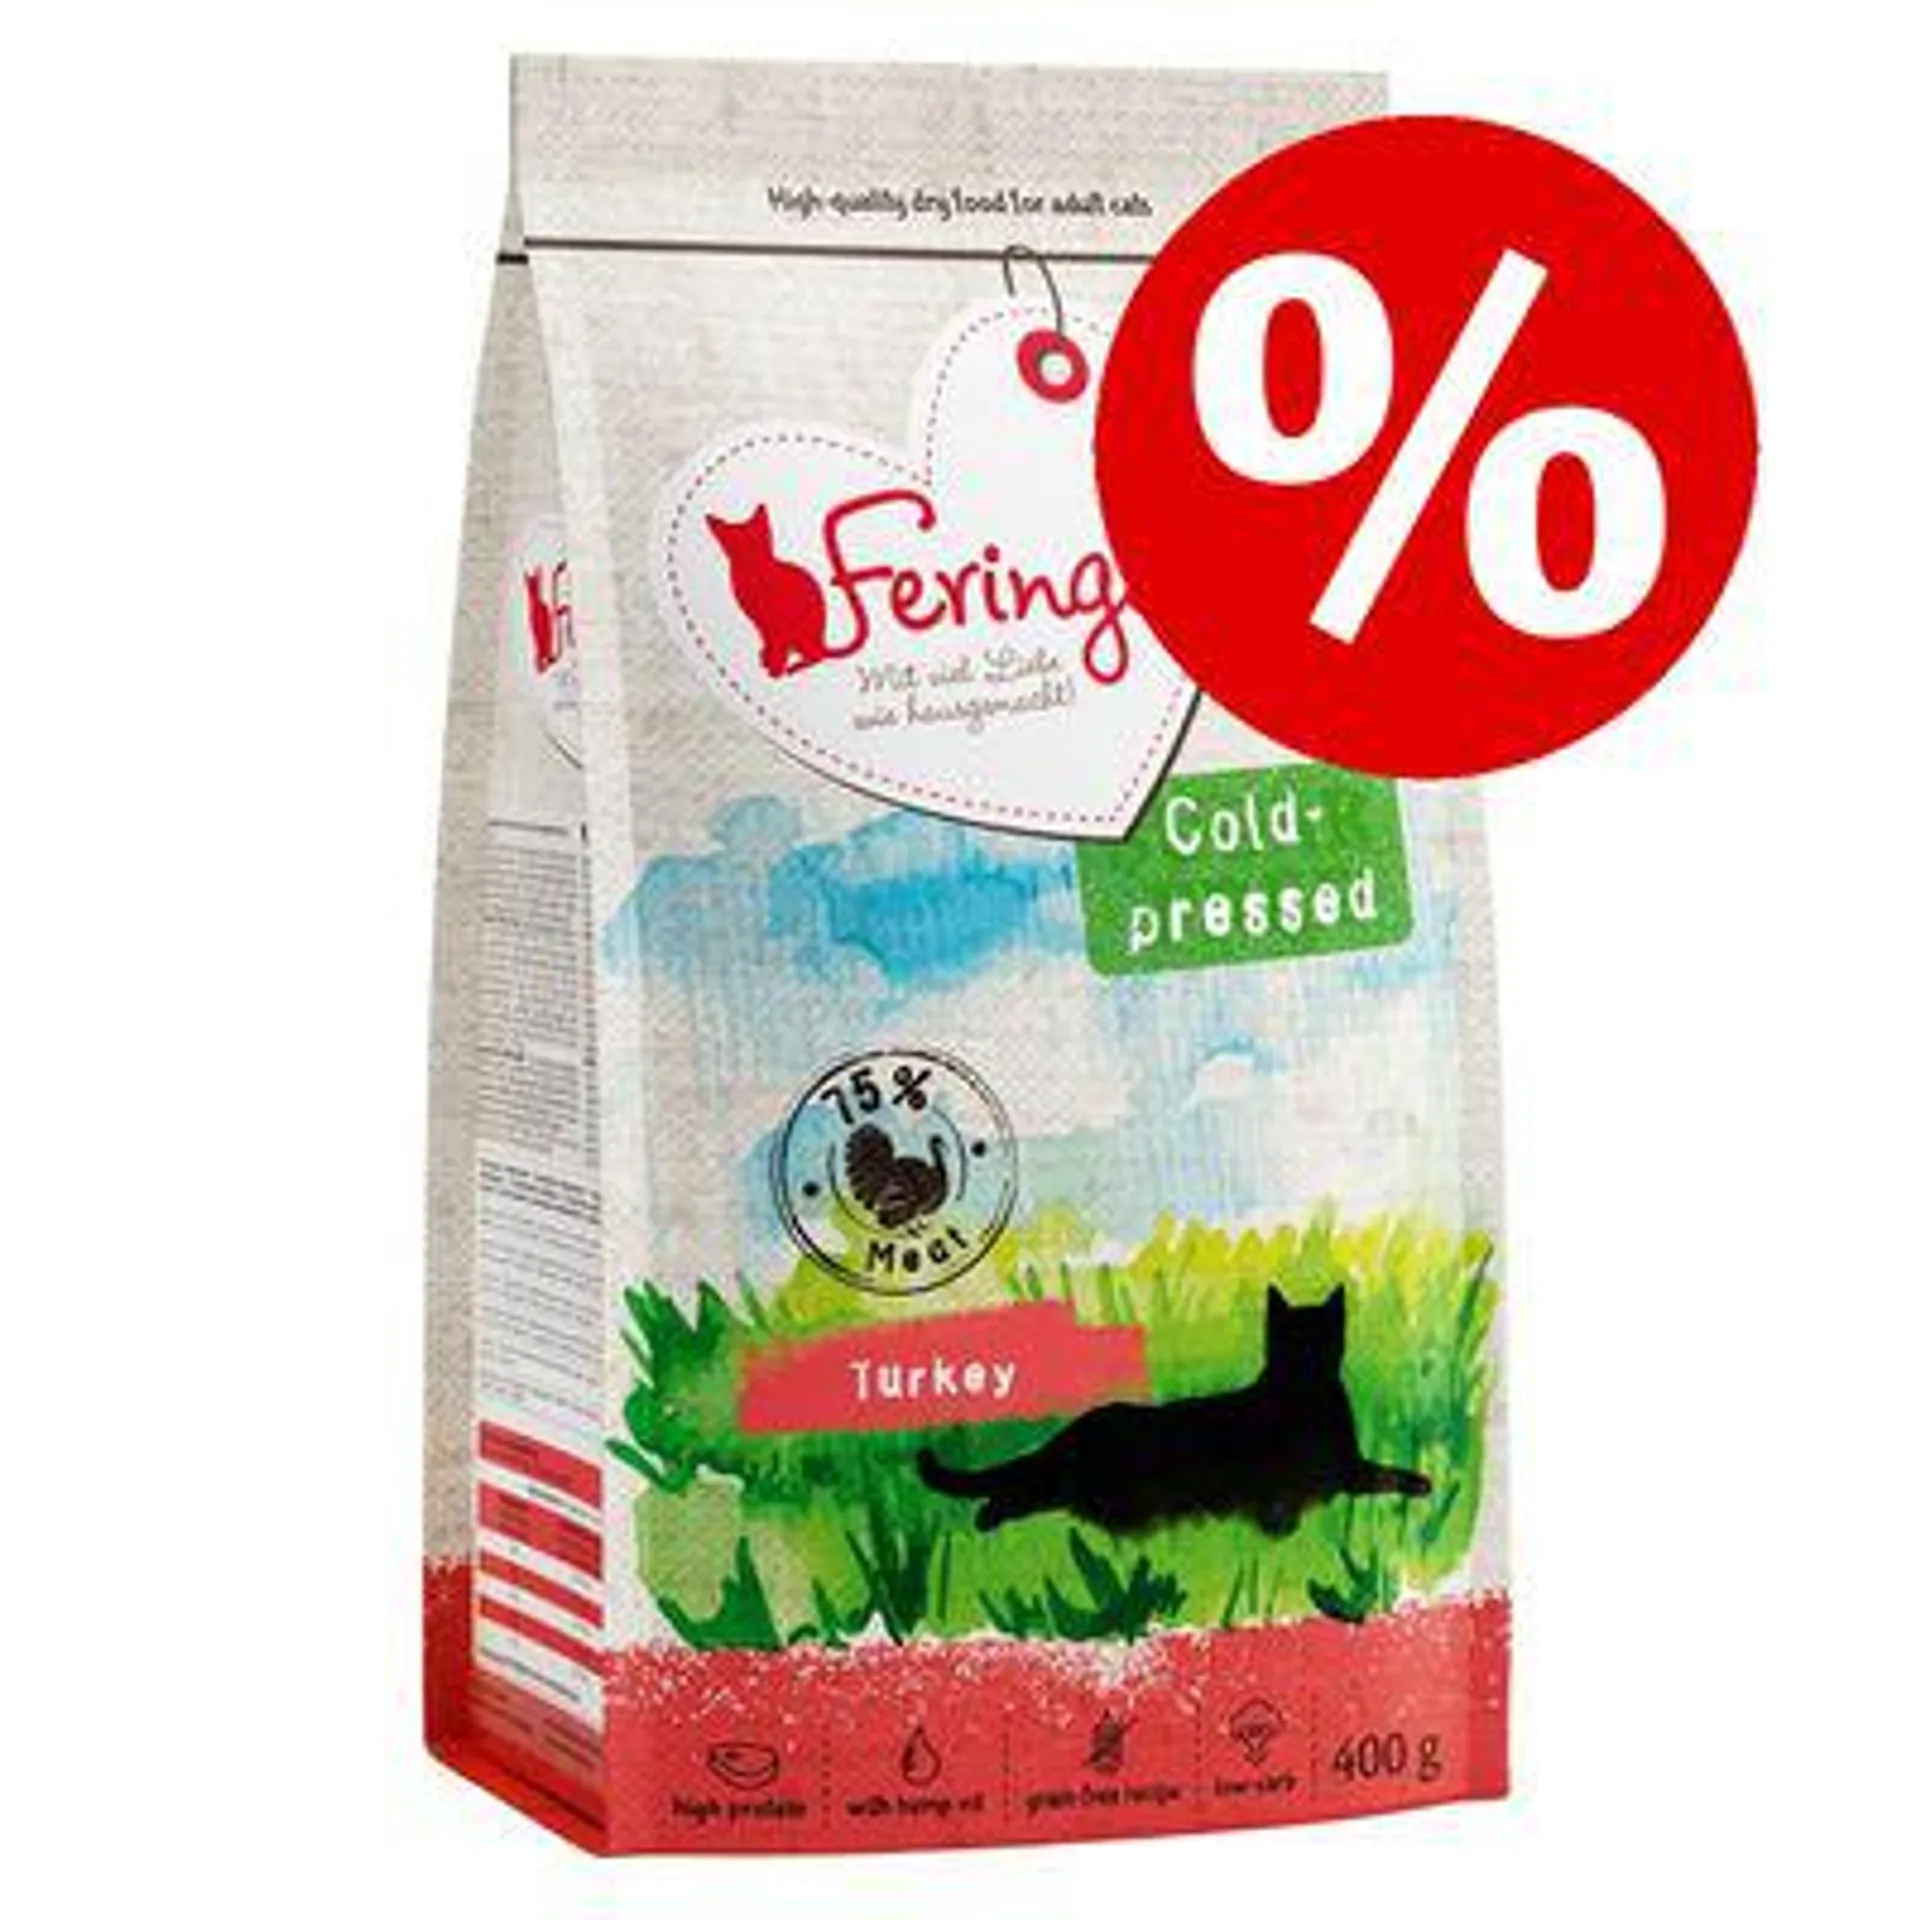 3kg/400g Feringa Cold-Pressed Dry Cat Food - Special Price!*